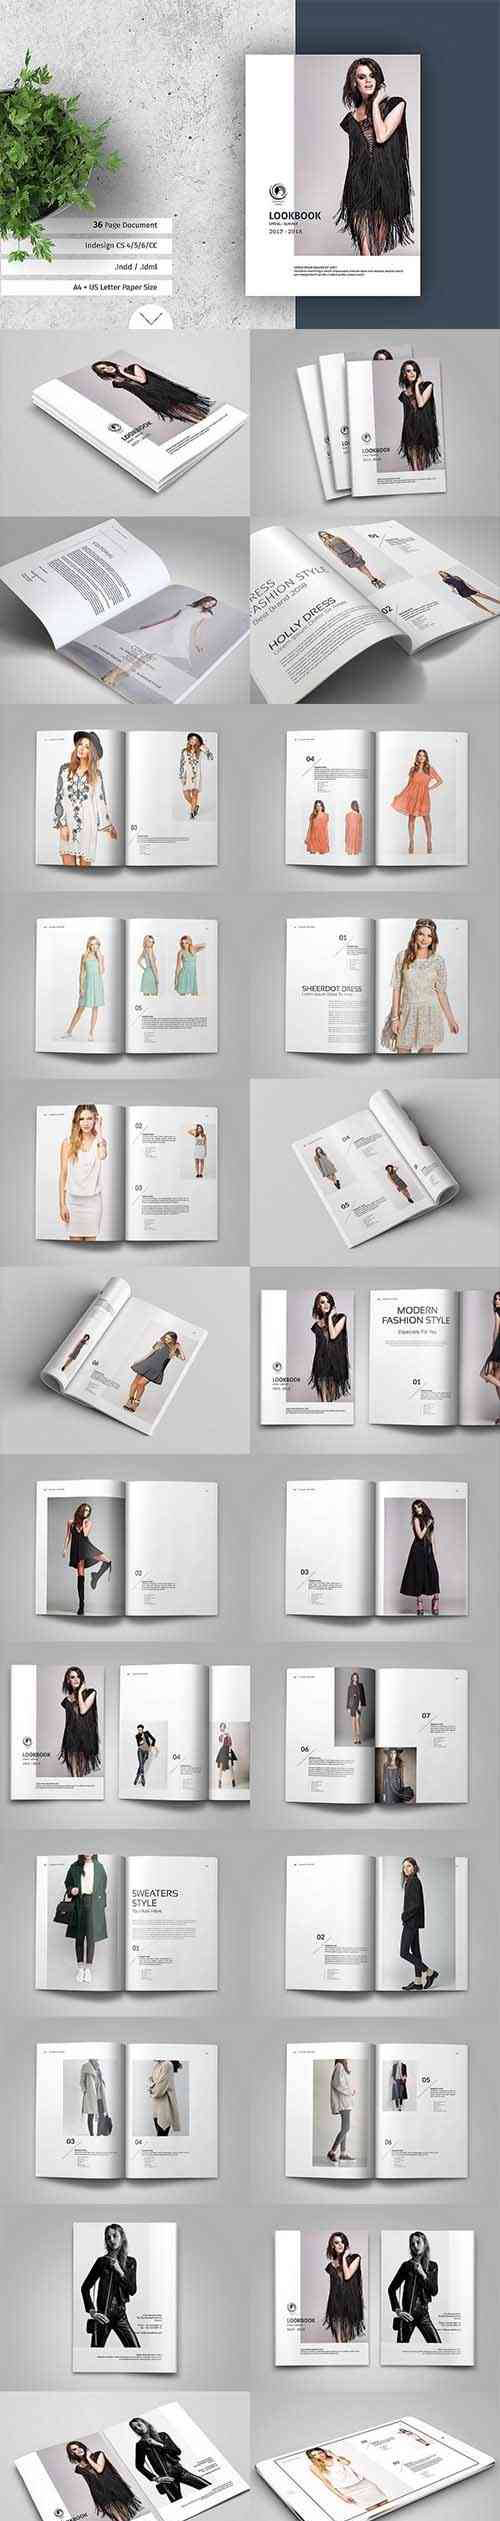 时尚女性服装品牌宣传册模板 Fashion Women’s Clothing Brand Brochure Template插图